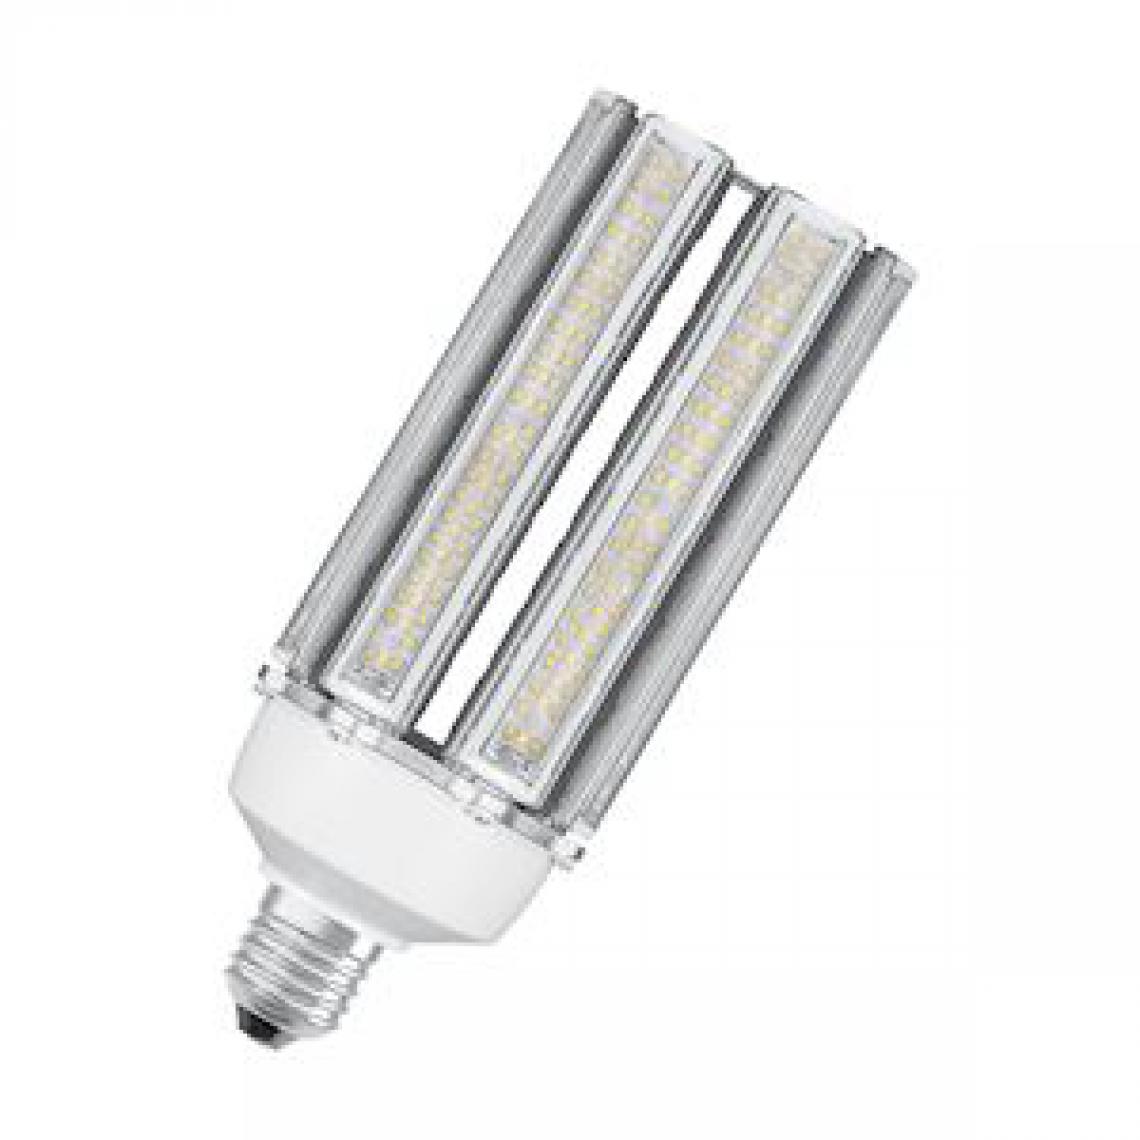 Osram - ampoule à led - osram hql led - pro 250 - e40 - 95w - 4000k - 13000 lm - ip65 - osram 124981 - Ampoules LED